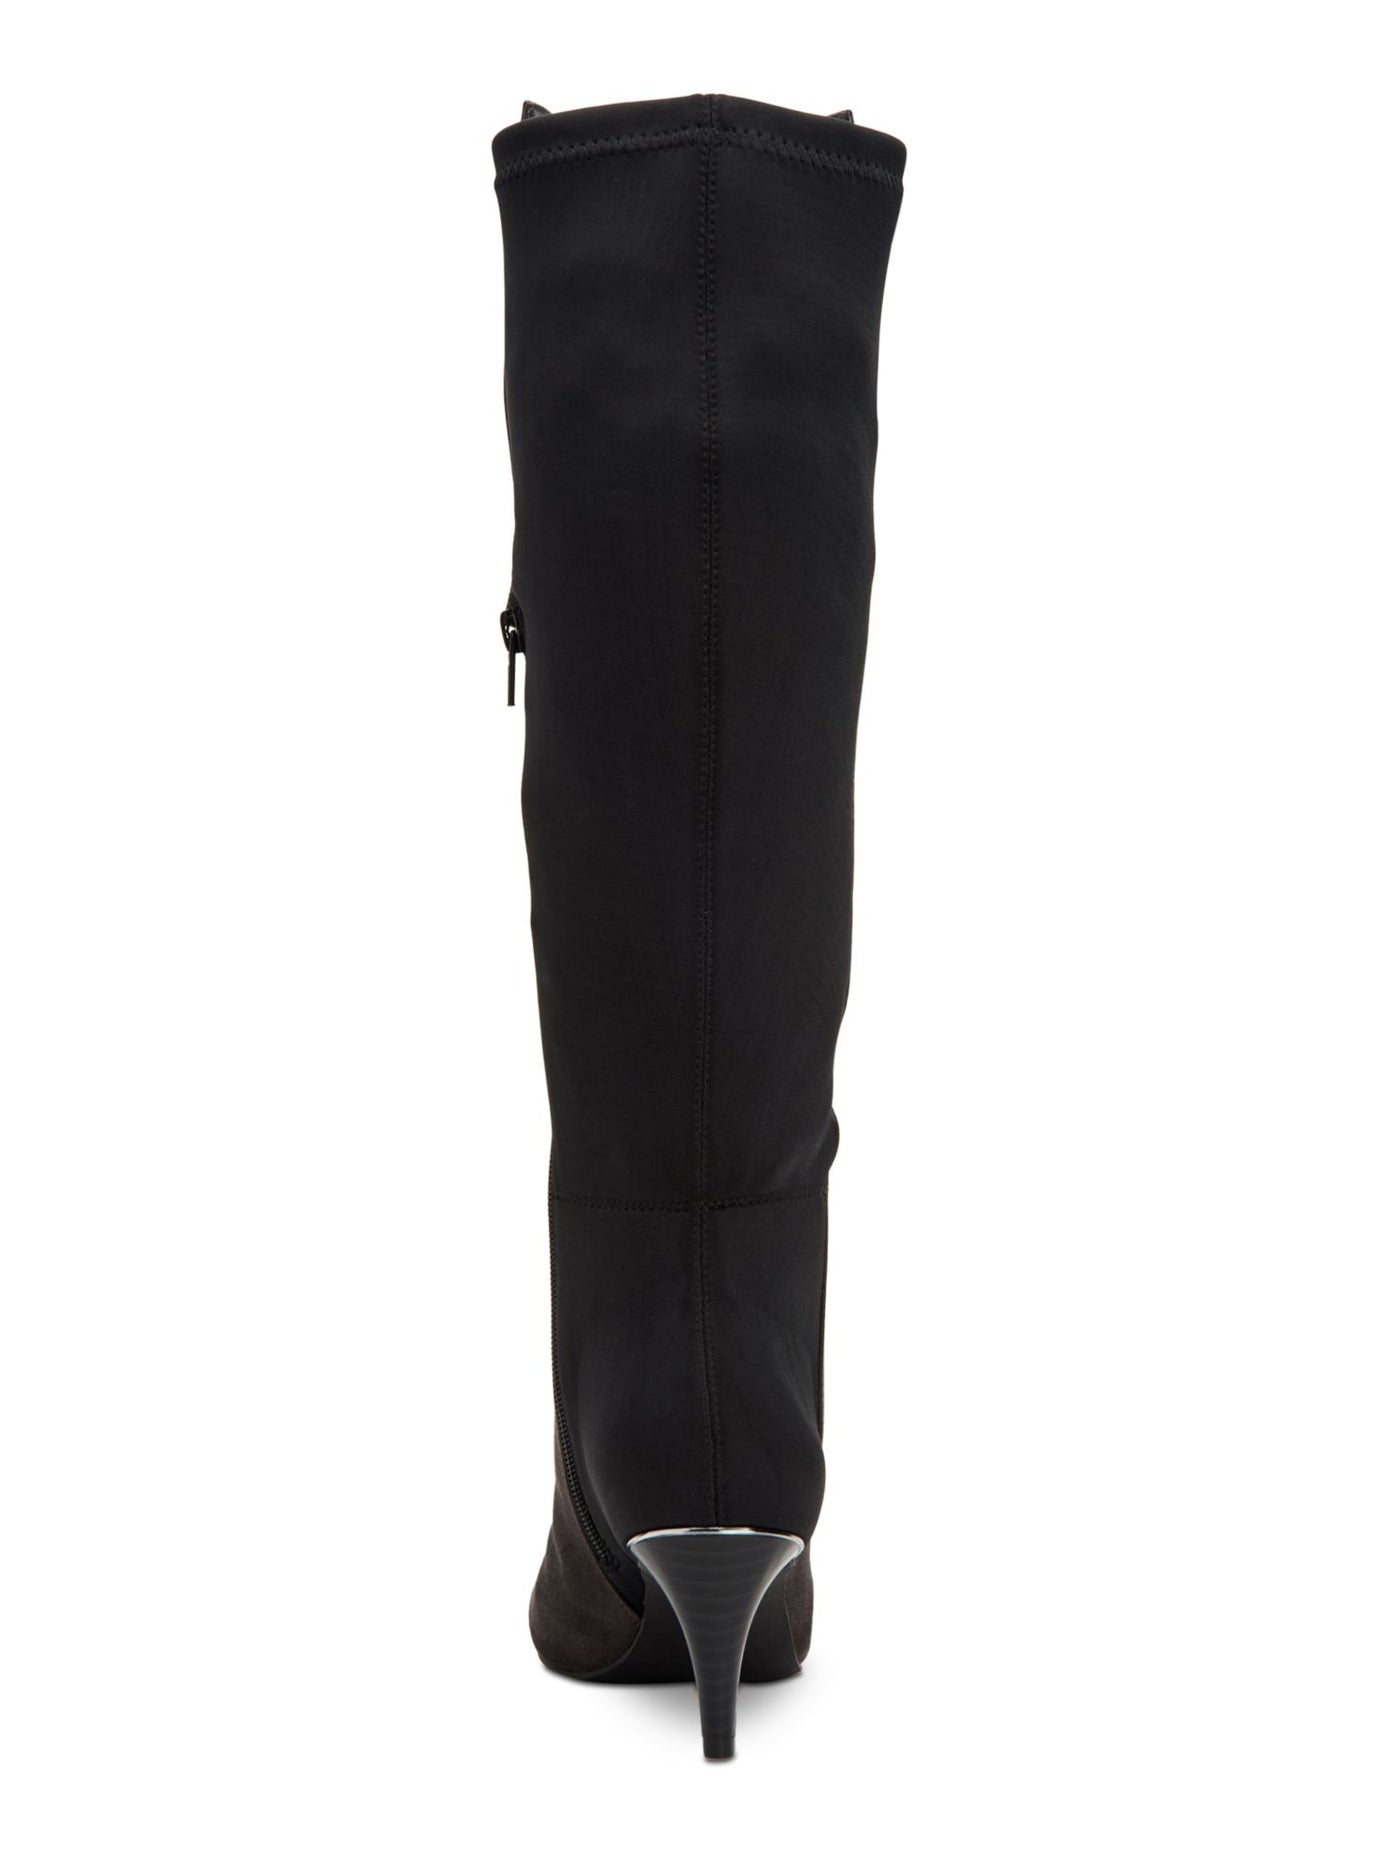 ALFANI Womens Black Arch Support Cushioned Hakuu Almond Toe Kitten Heel Zip-Up Heeled Boots 10 M WC